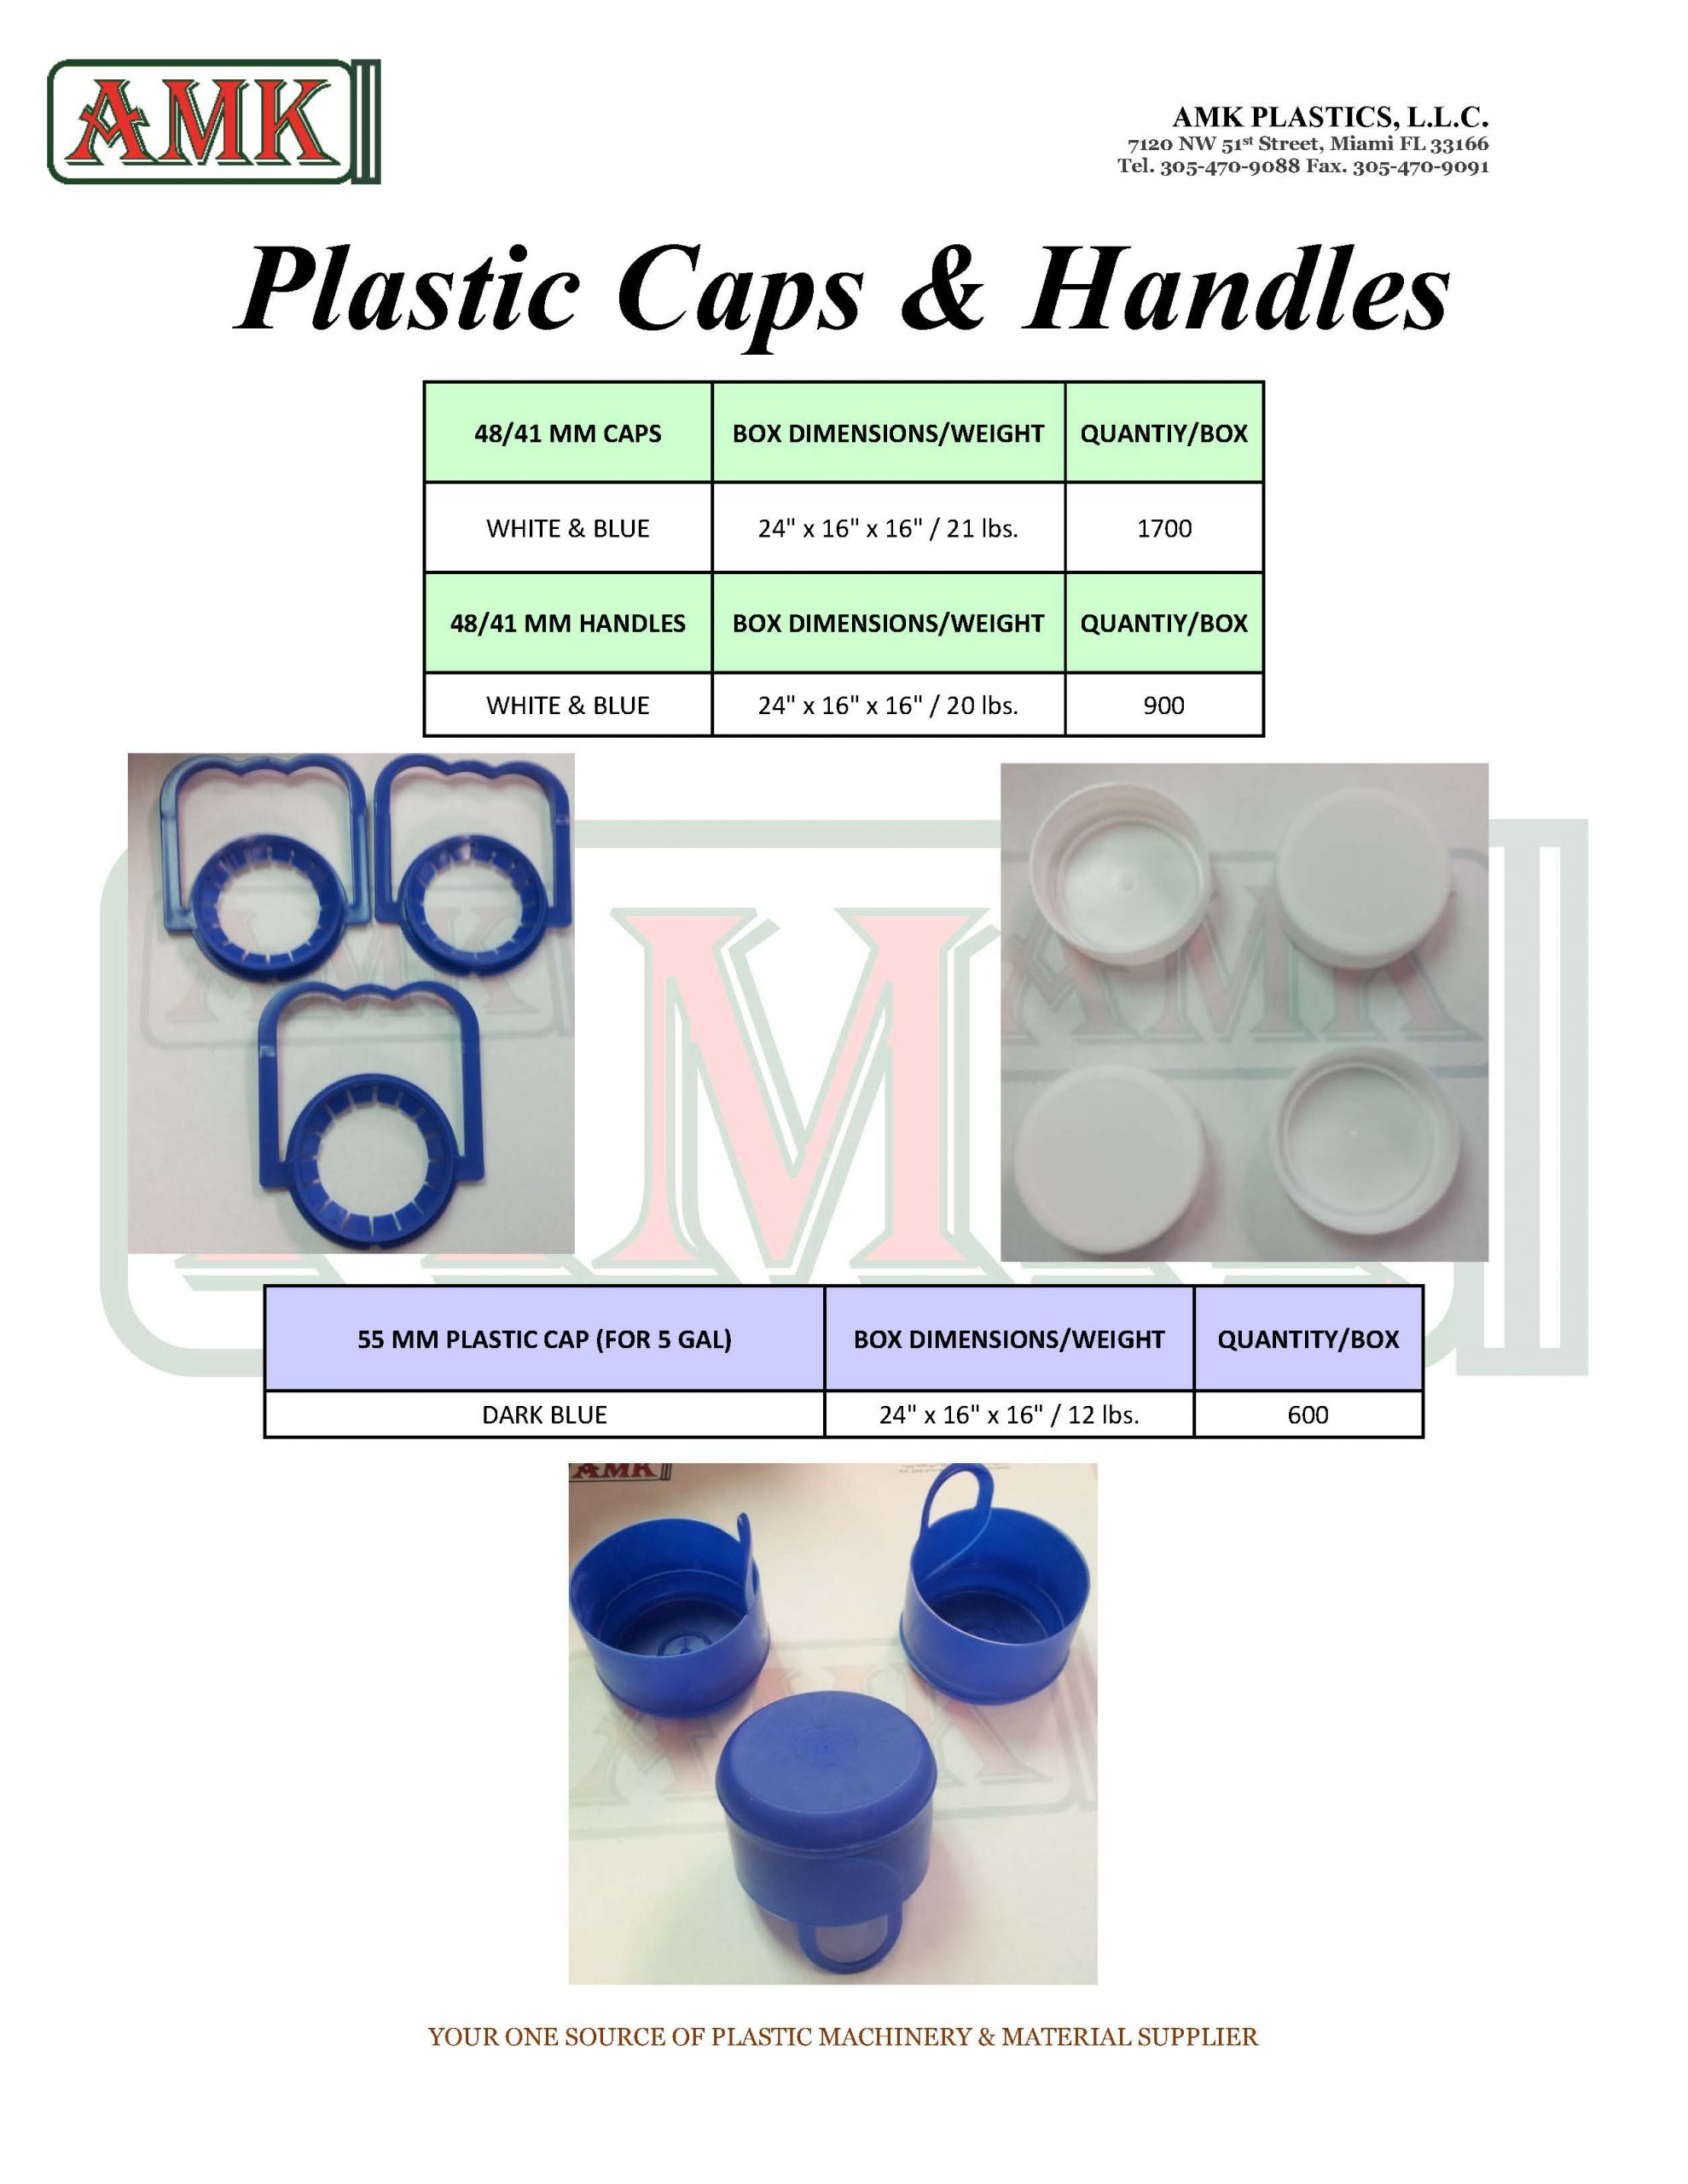 PLASTIC CAPS & HANDLES